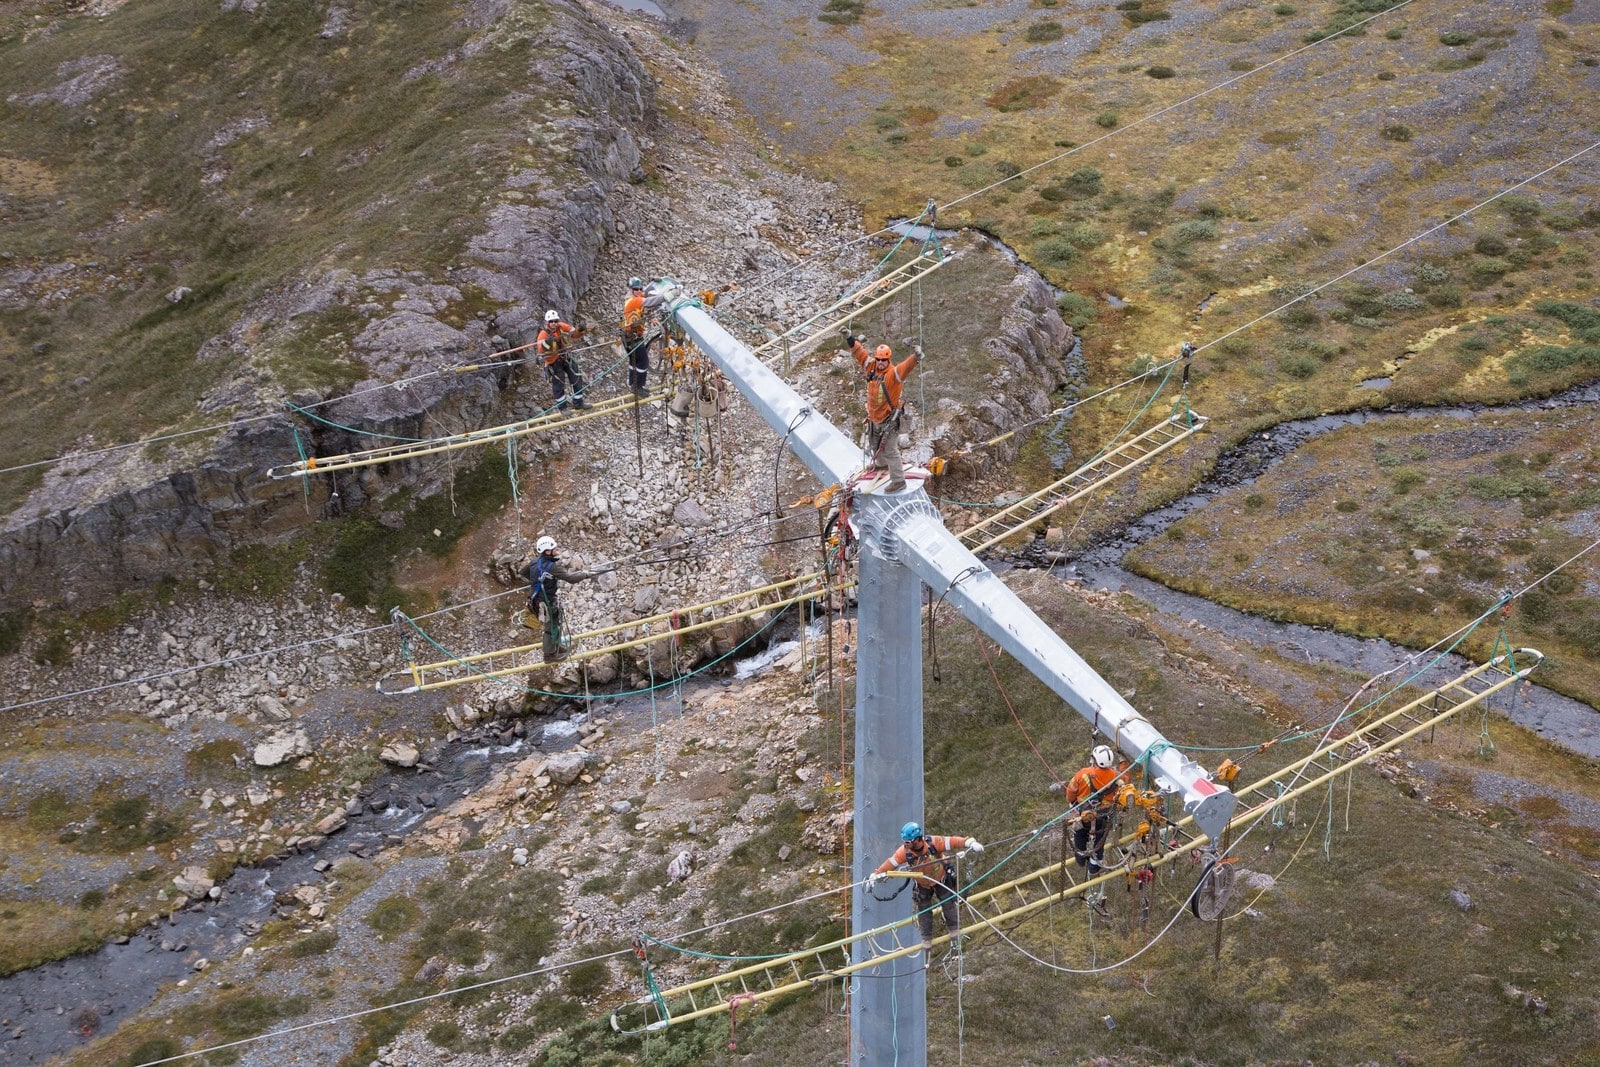 Rokstad Power linemen at work installing transmission line